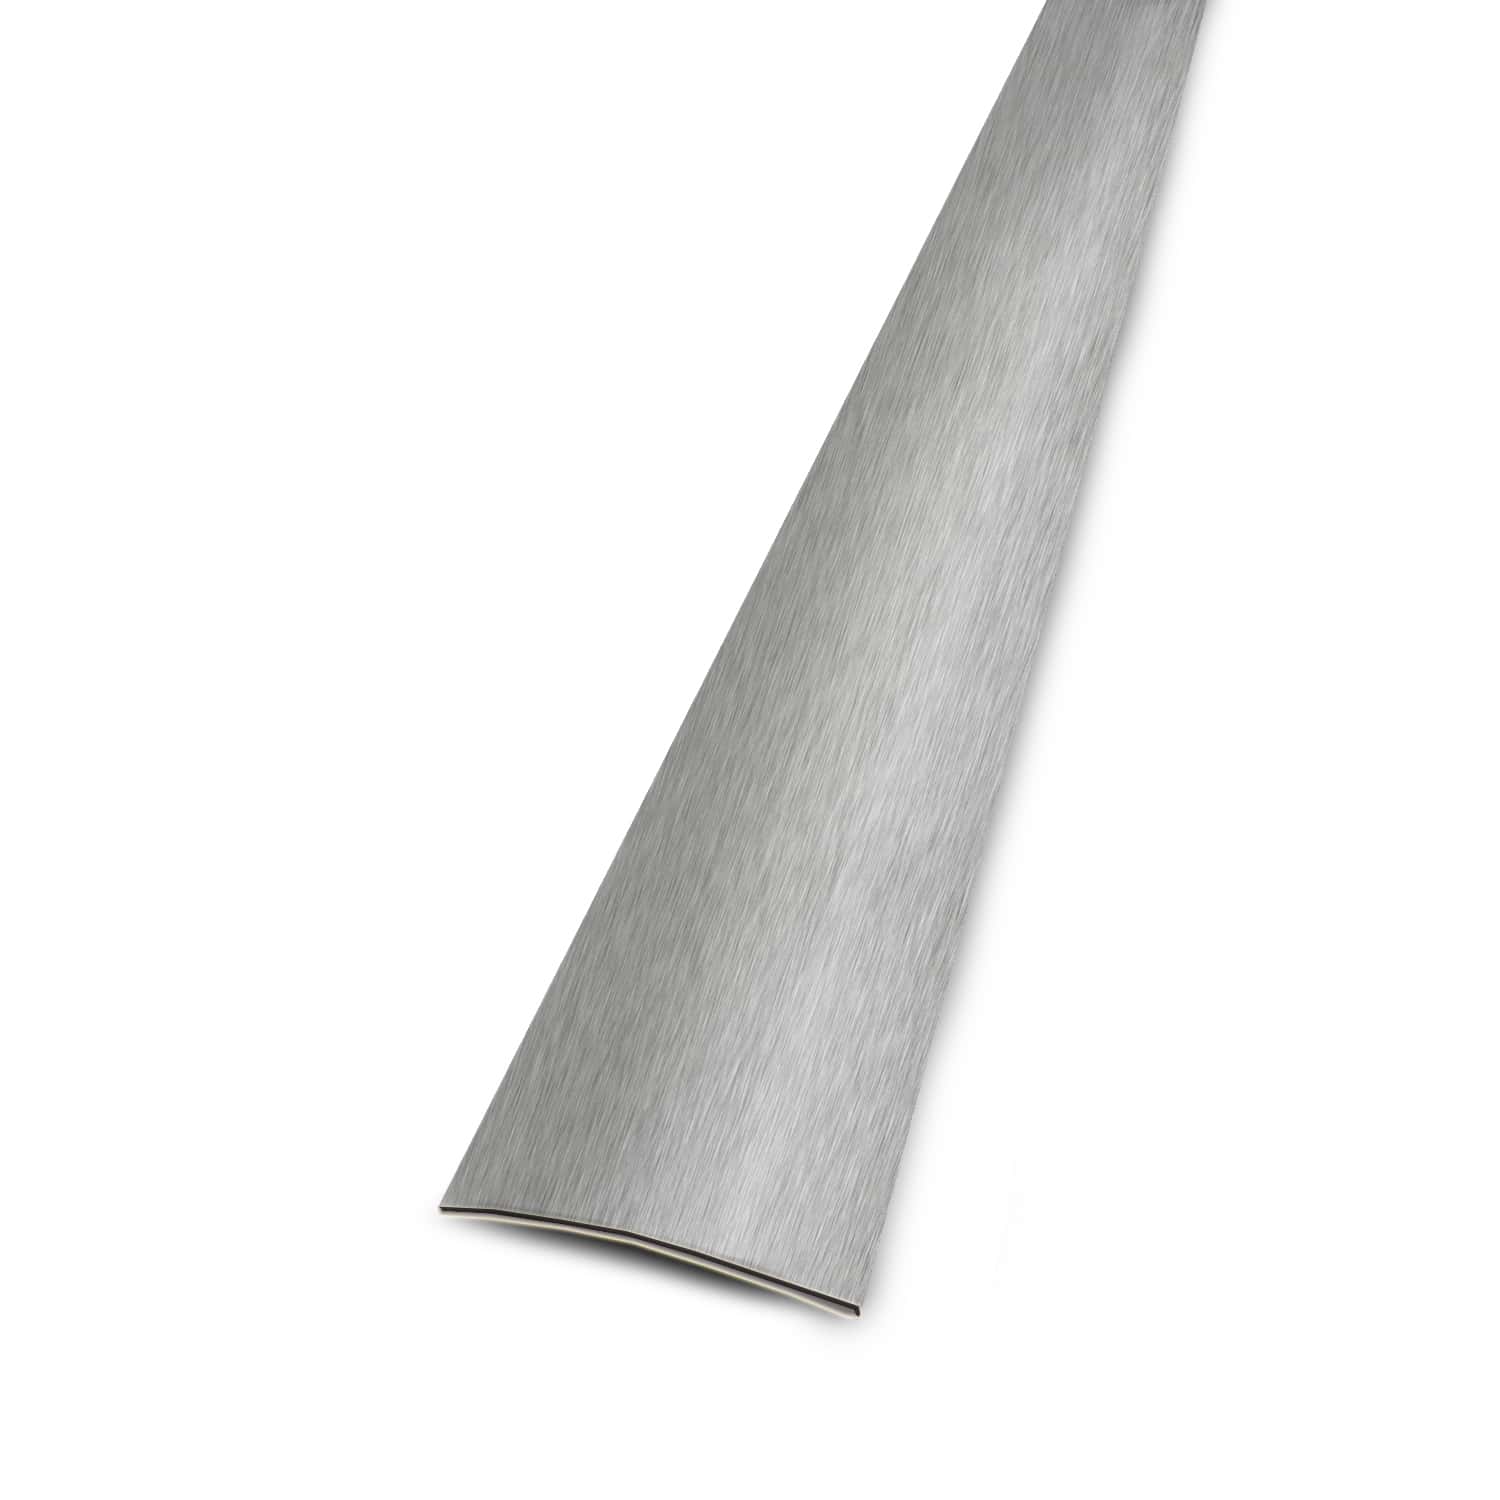 Barre de seuil plat adhésive en acier inoxydable 73 x 3 cm